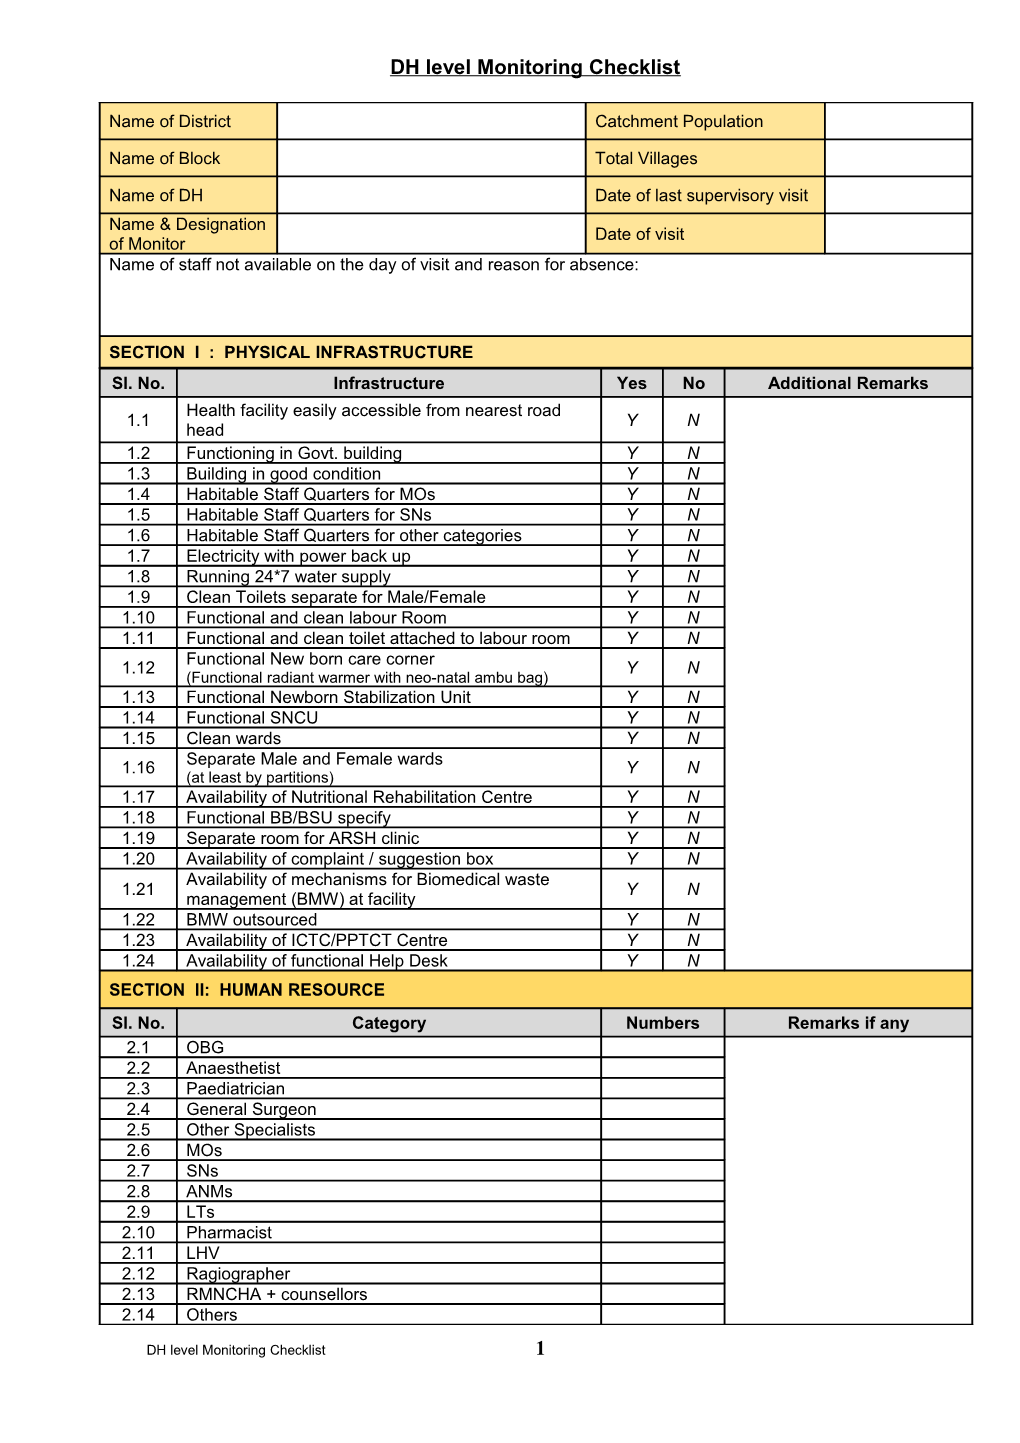 DH Level Monitoring Checklist